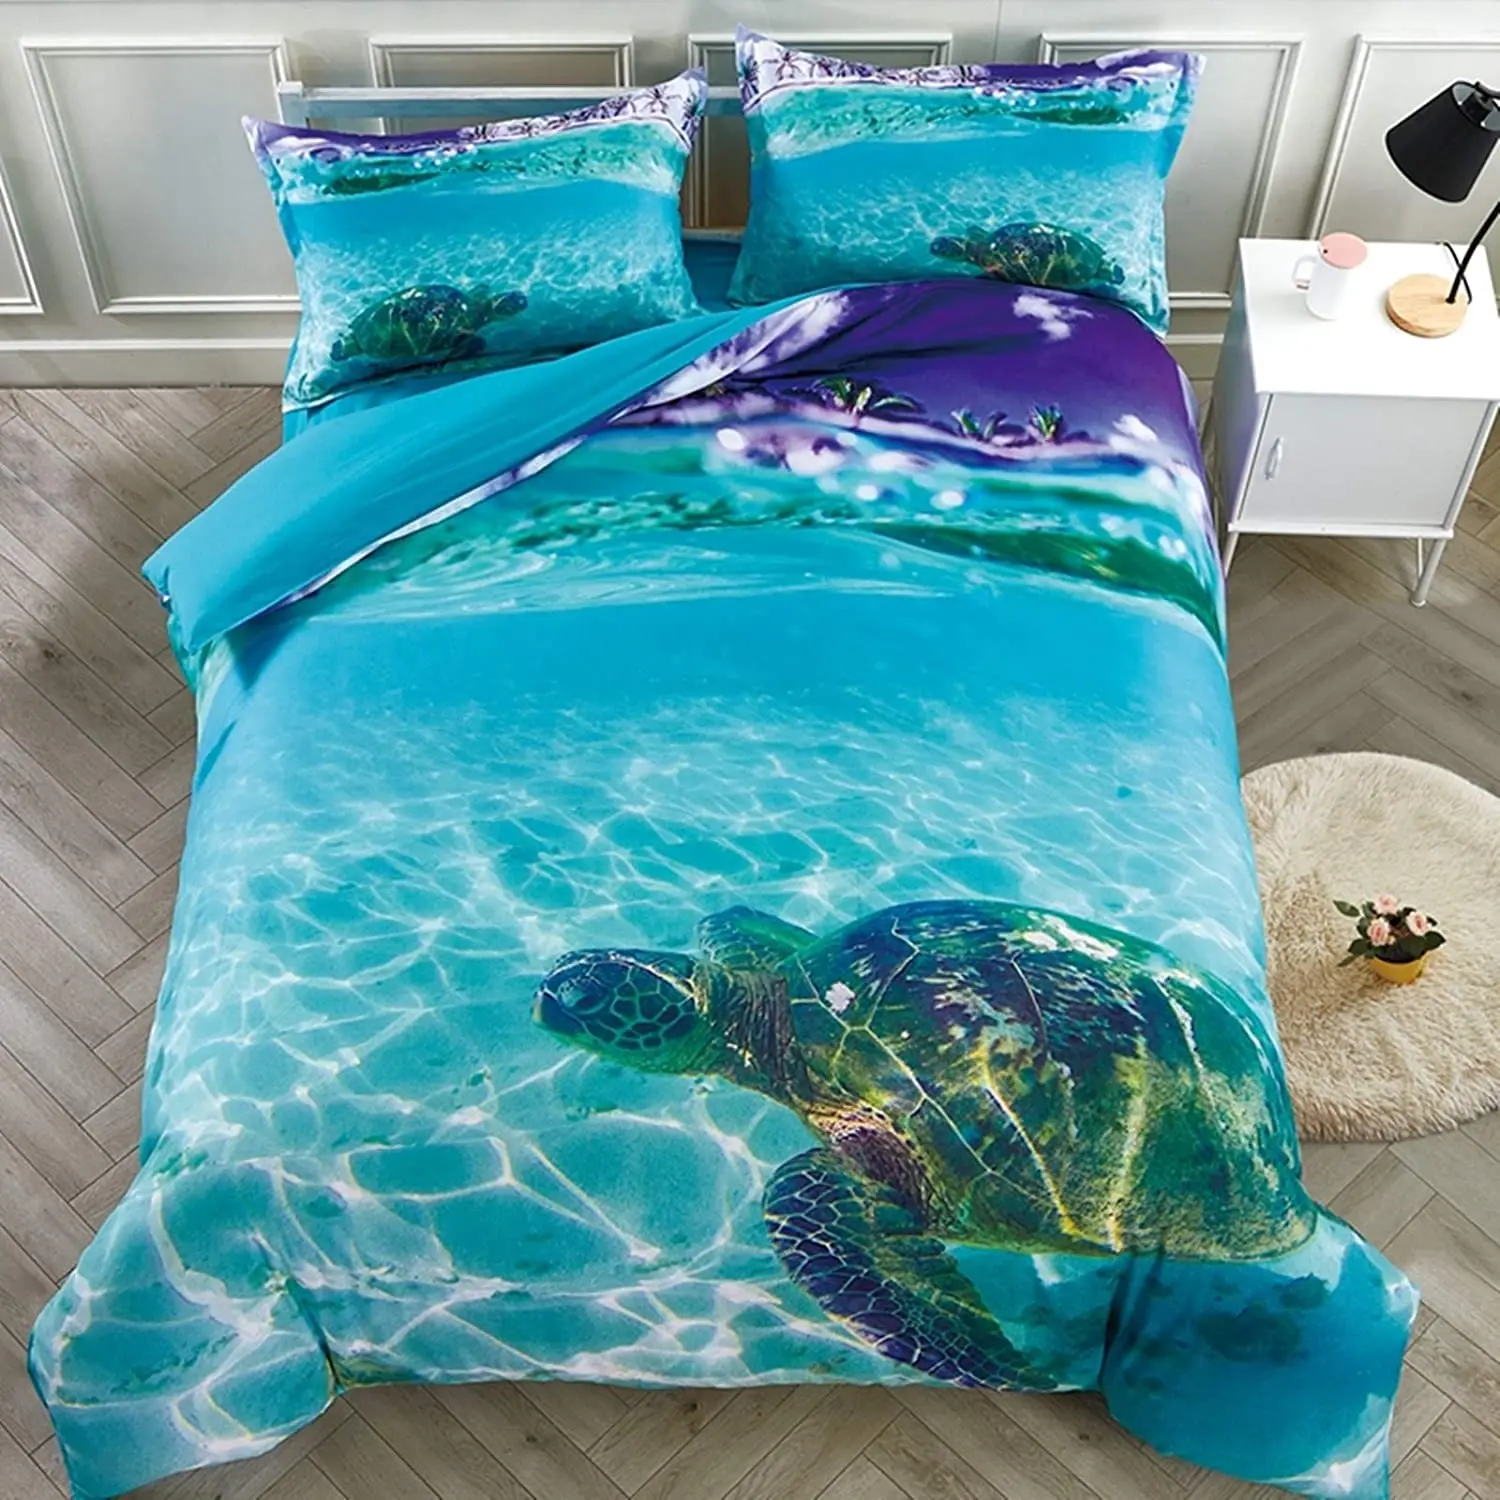 

Beddinginn 3D Bedding Animal Print Kids Duvet Cover Set Turtle in The Blue Limpid Ocean Print